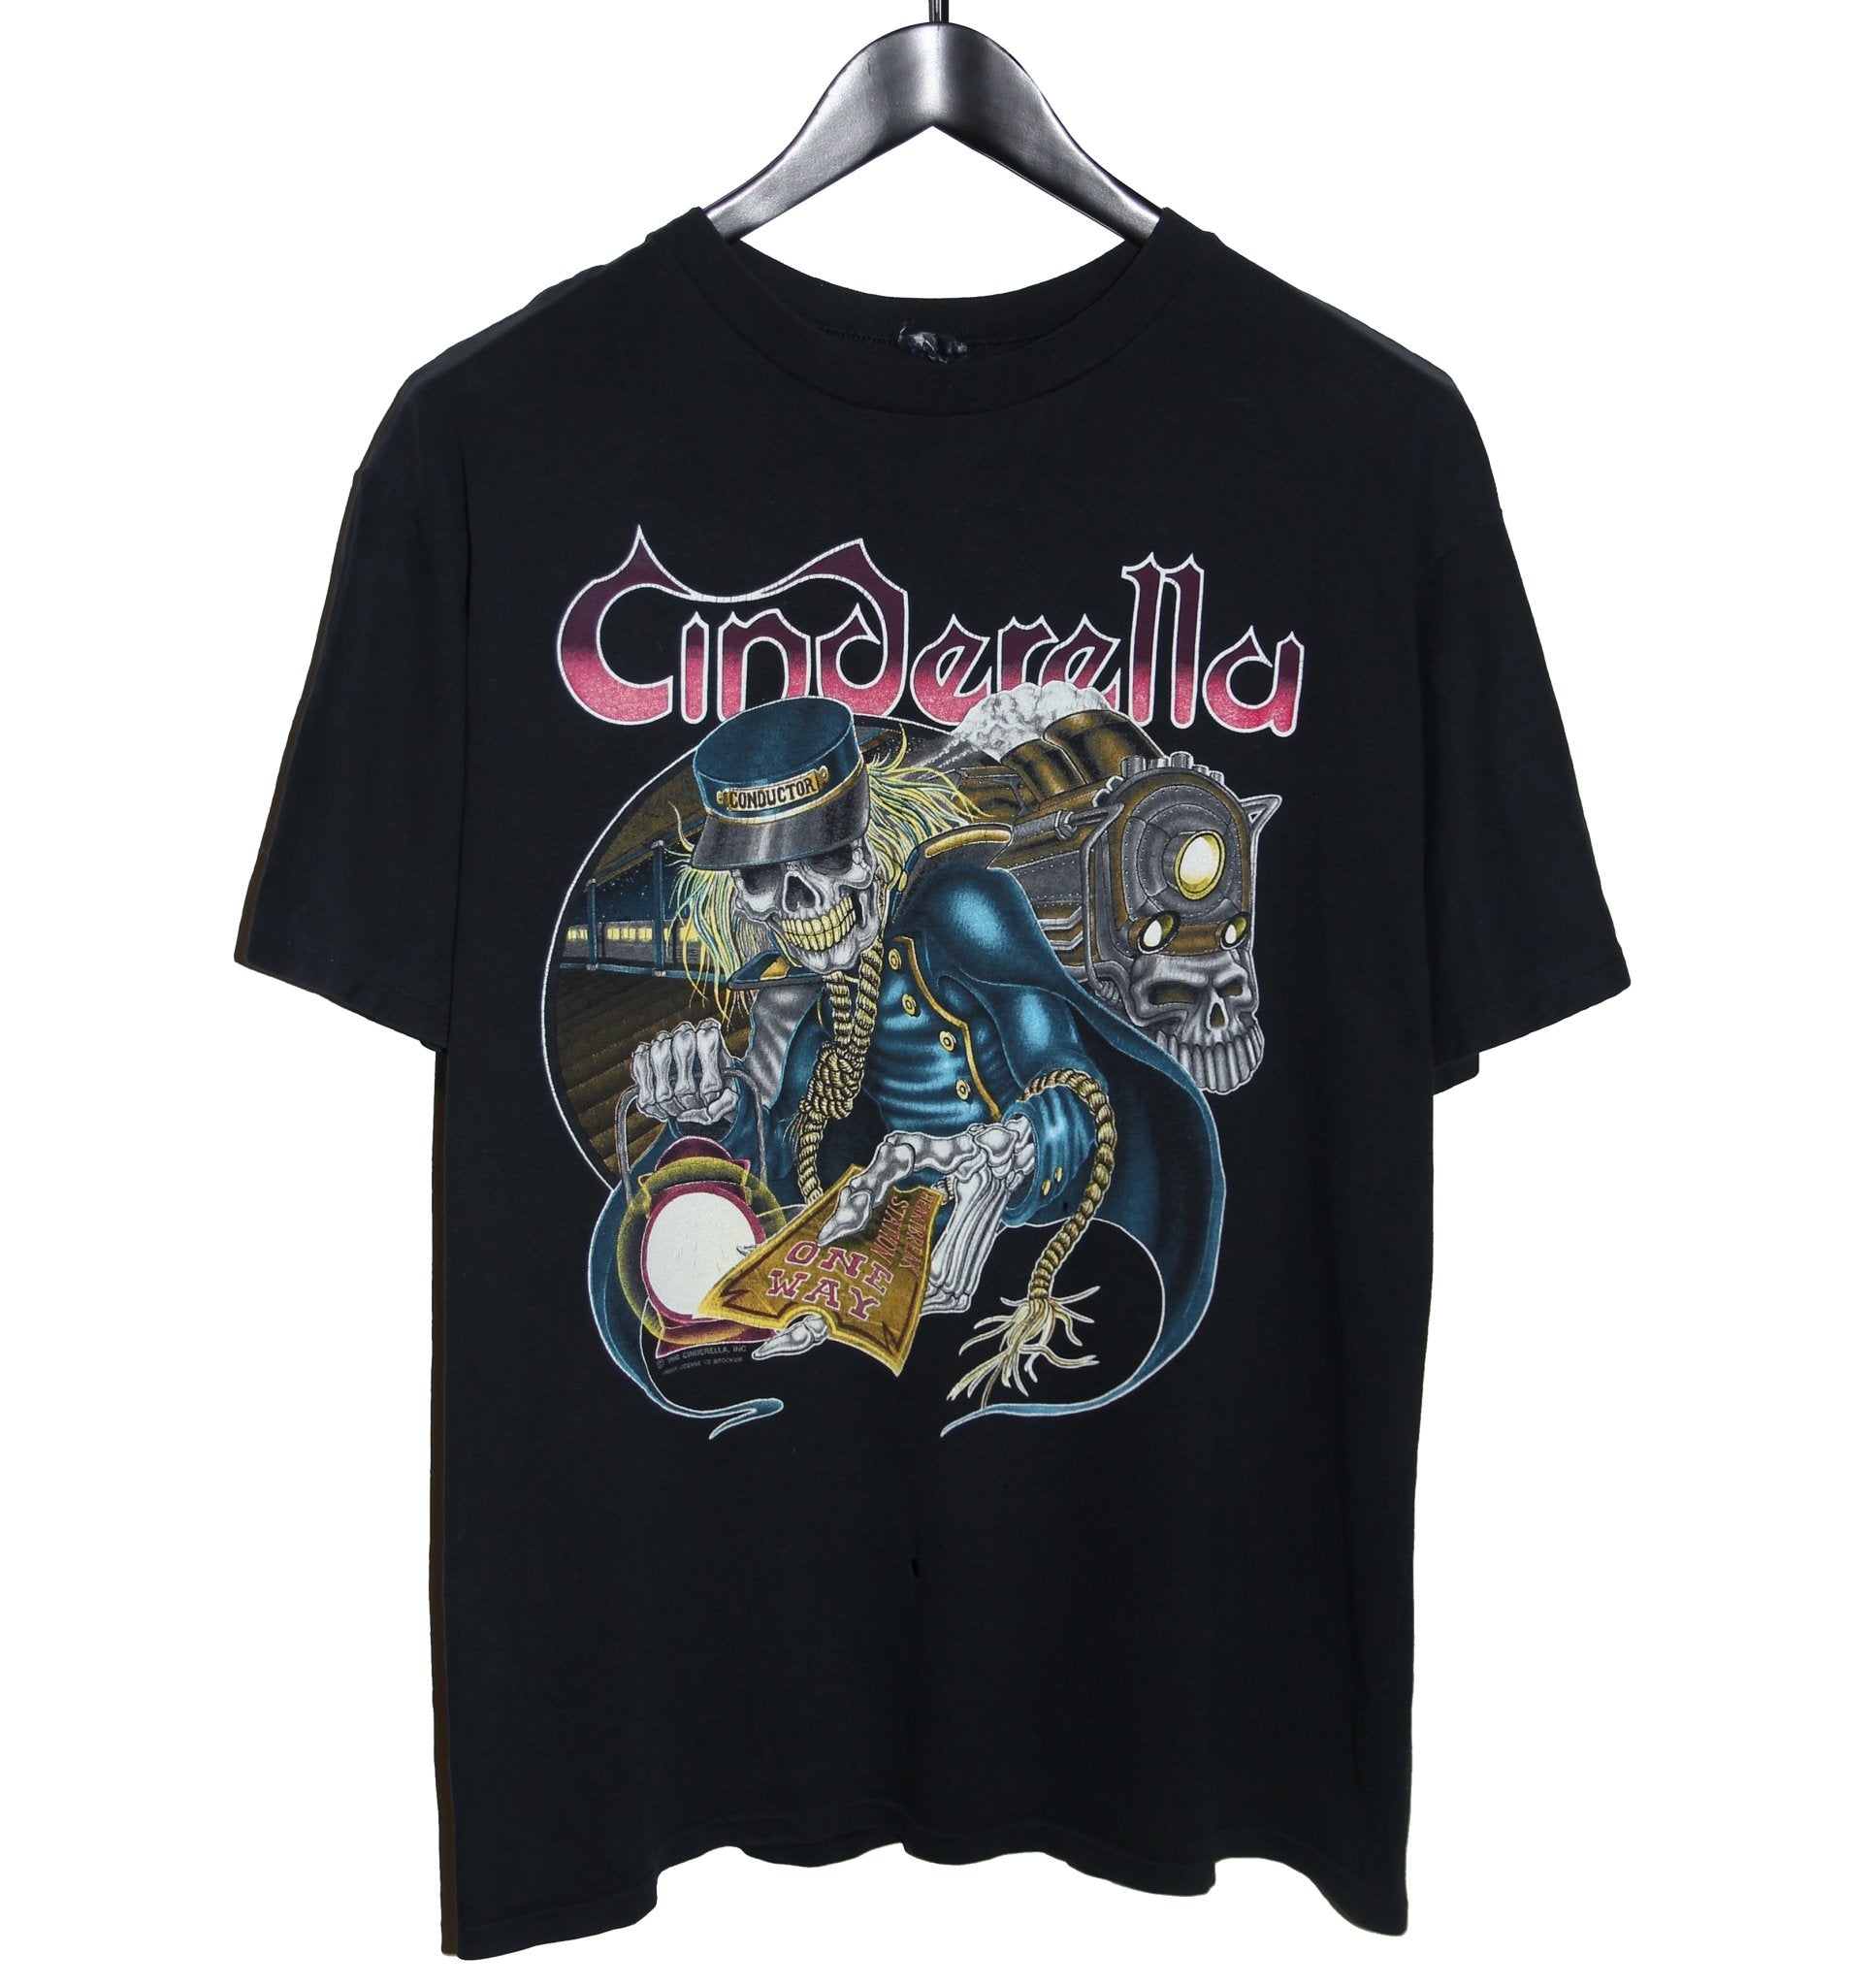 Cinderella 1991 Heartbreak Station Tour Shirt - Faded AU